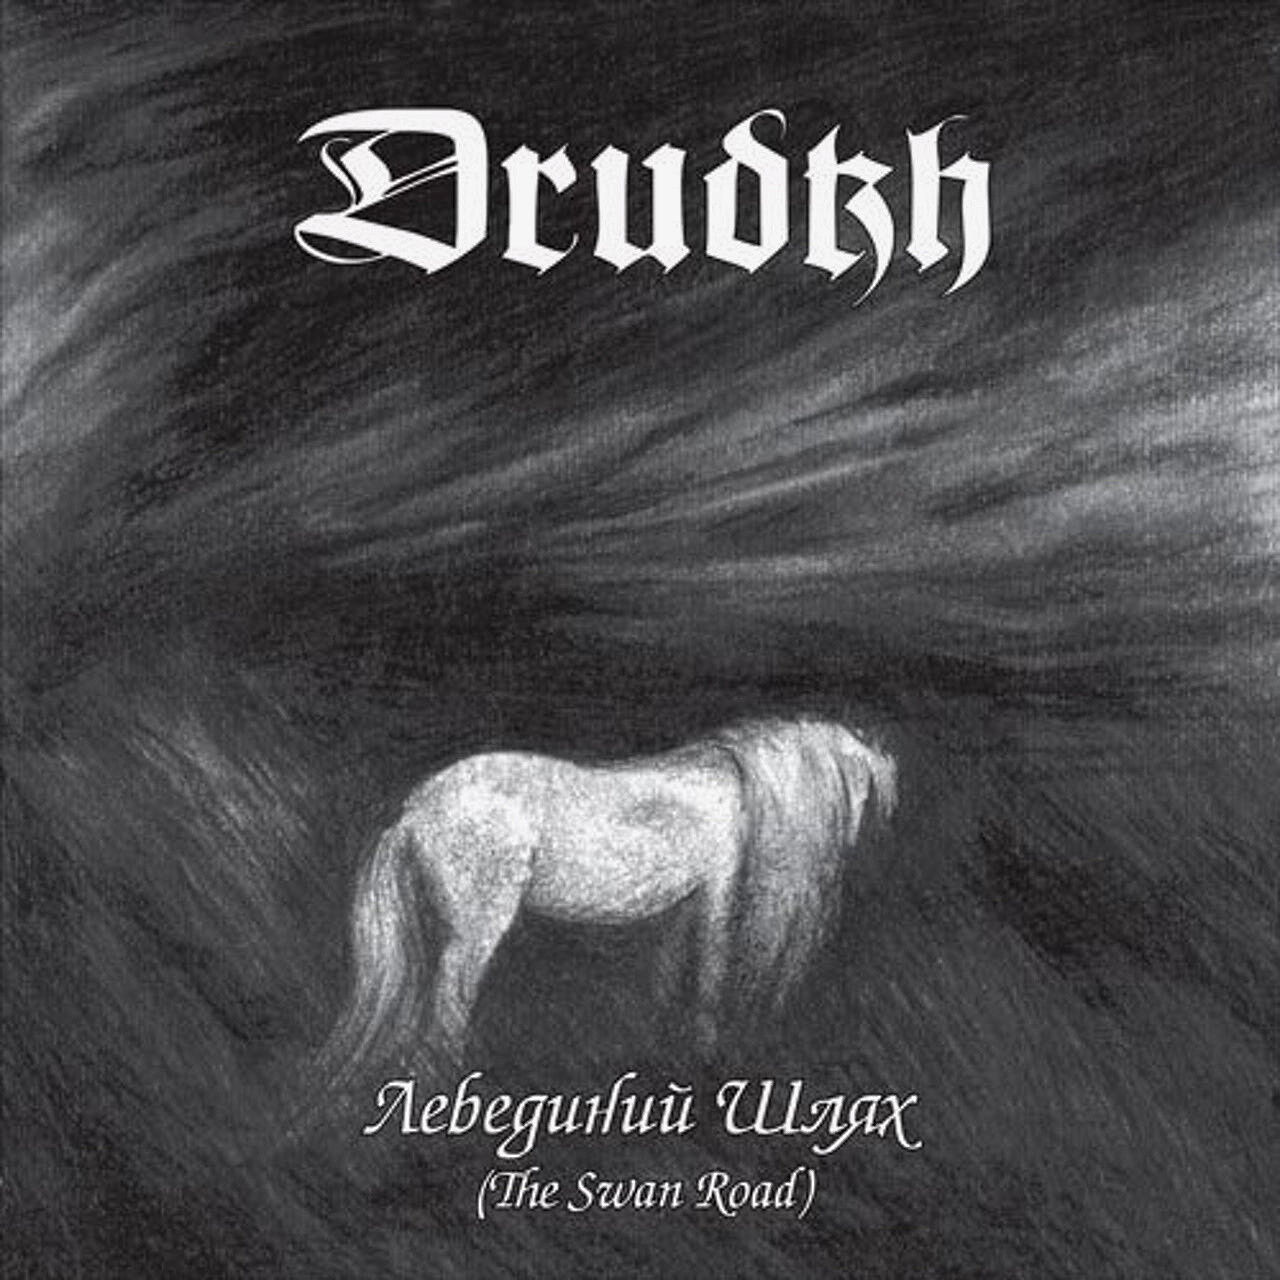 DRUDKH - The Swan Road [SILVER LP]